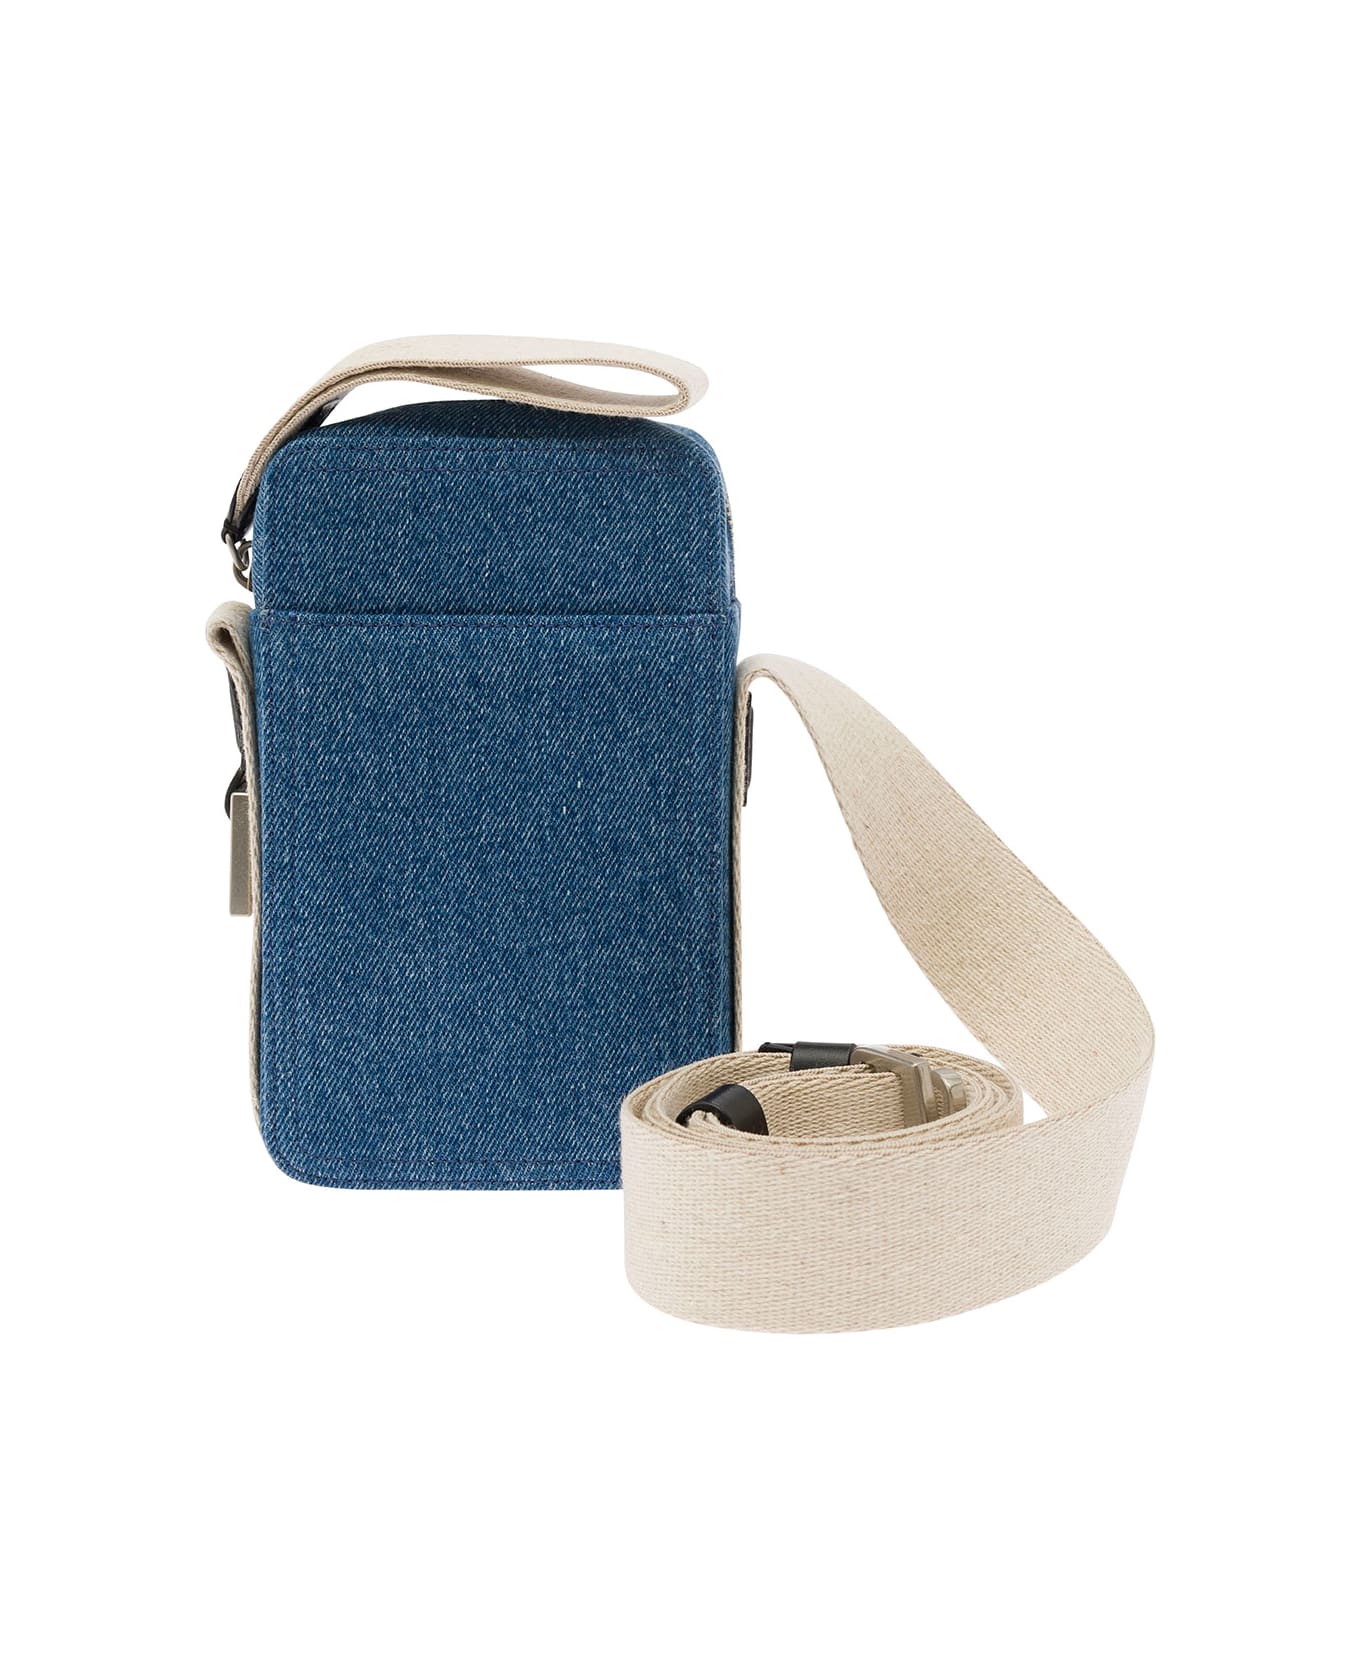 Jacquemus 'la Cuerda Vertical' Blue Shoulder Bag With Front Animal In Leather Man - Blu